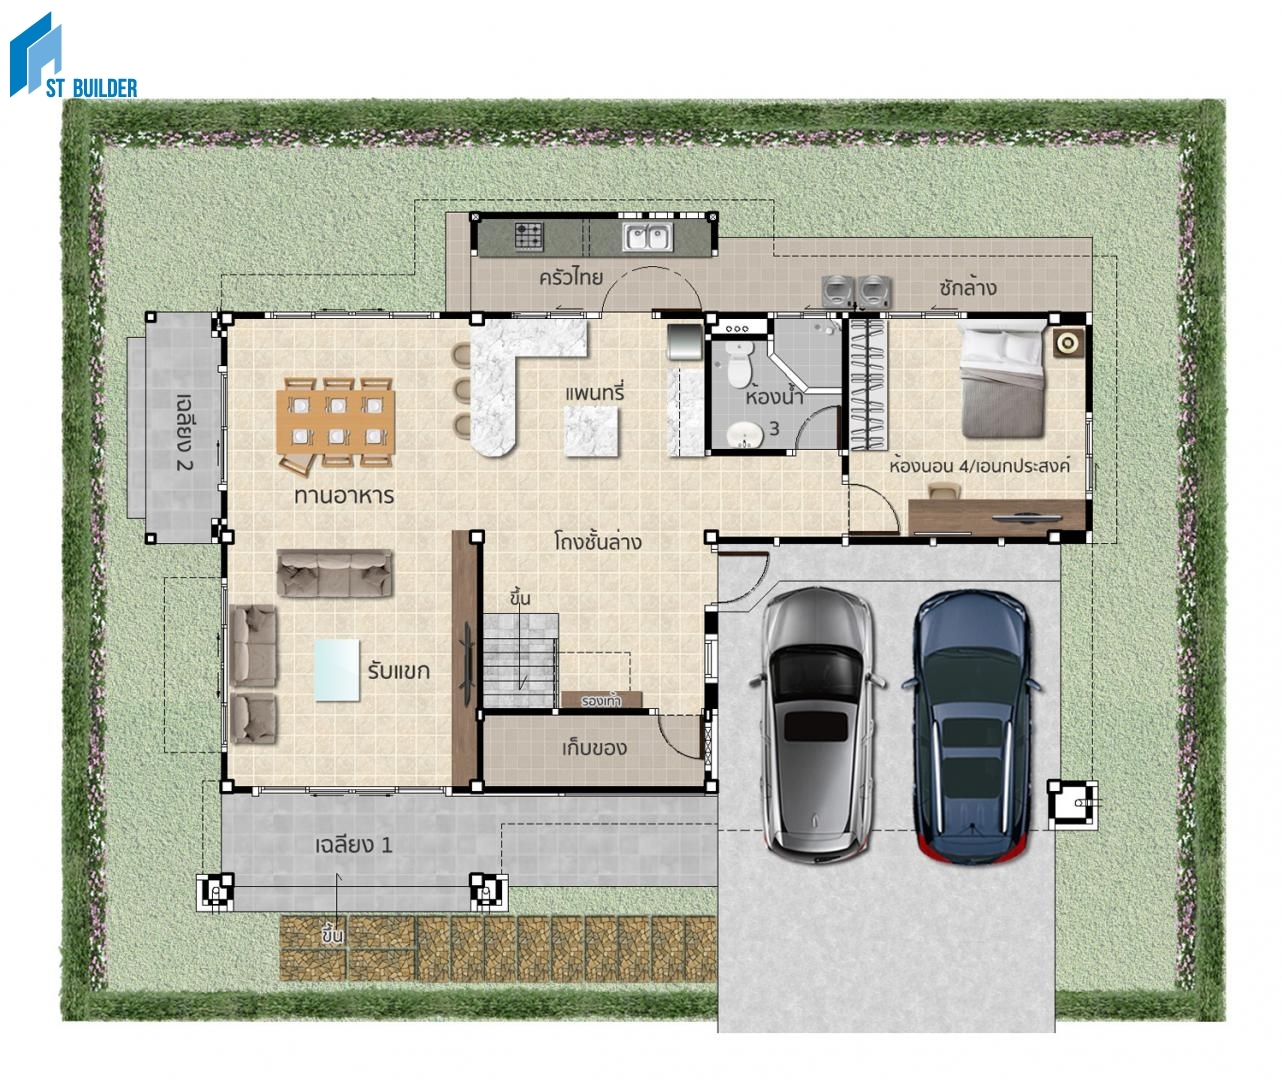 STE-208 Floor Plan A1